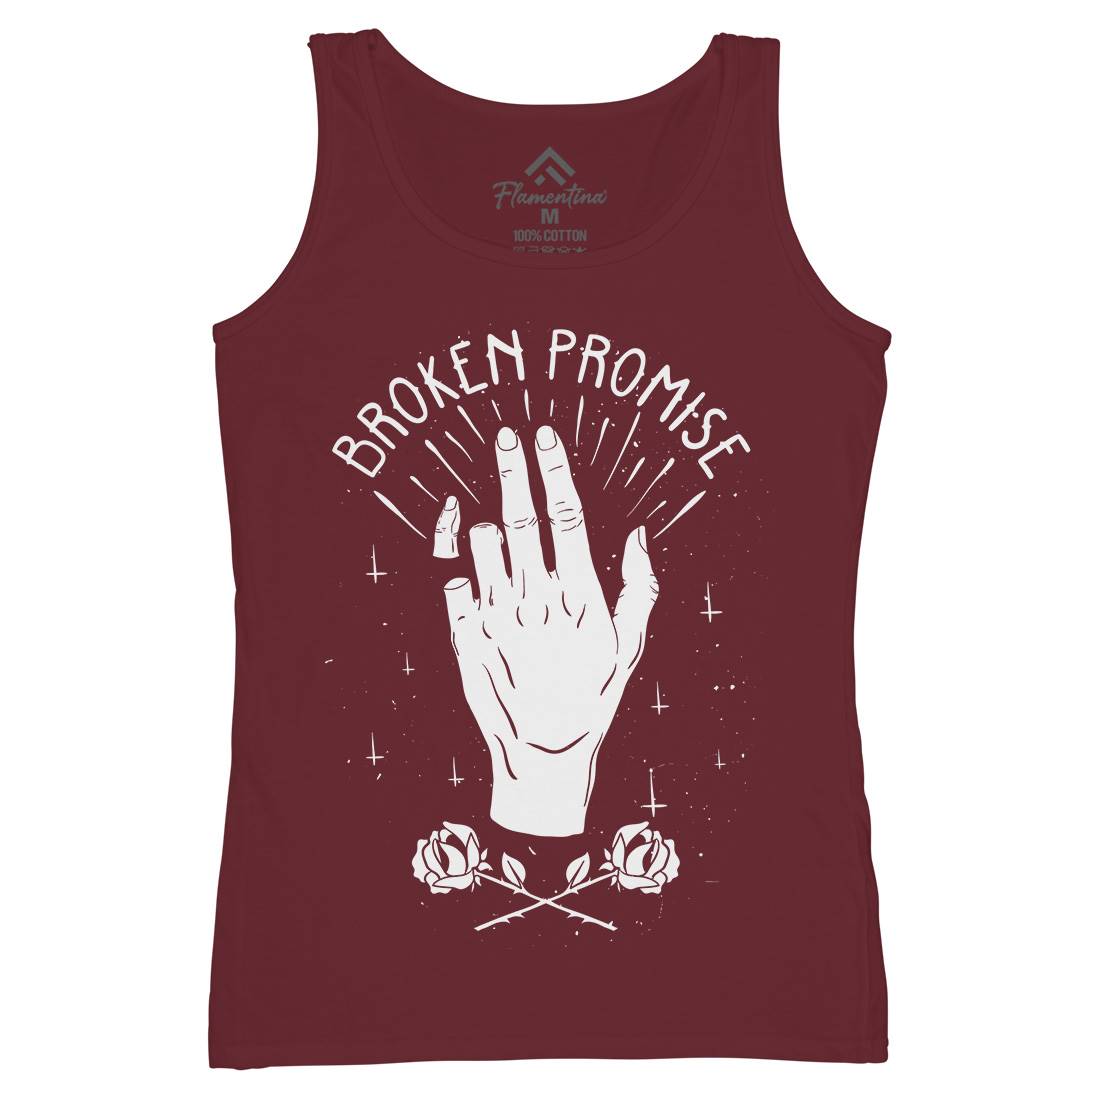 Broken Promise Womens Organic Tank Top Vest Retro D447